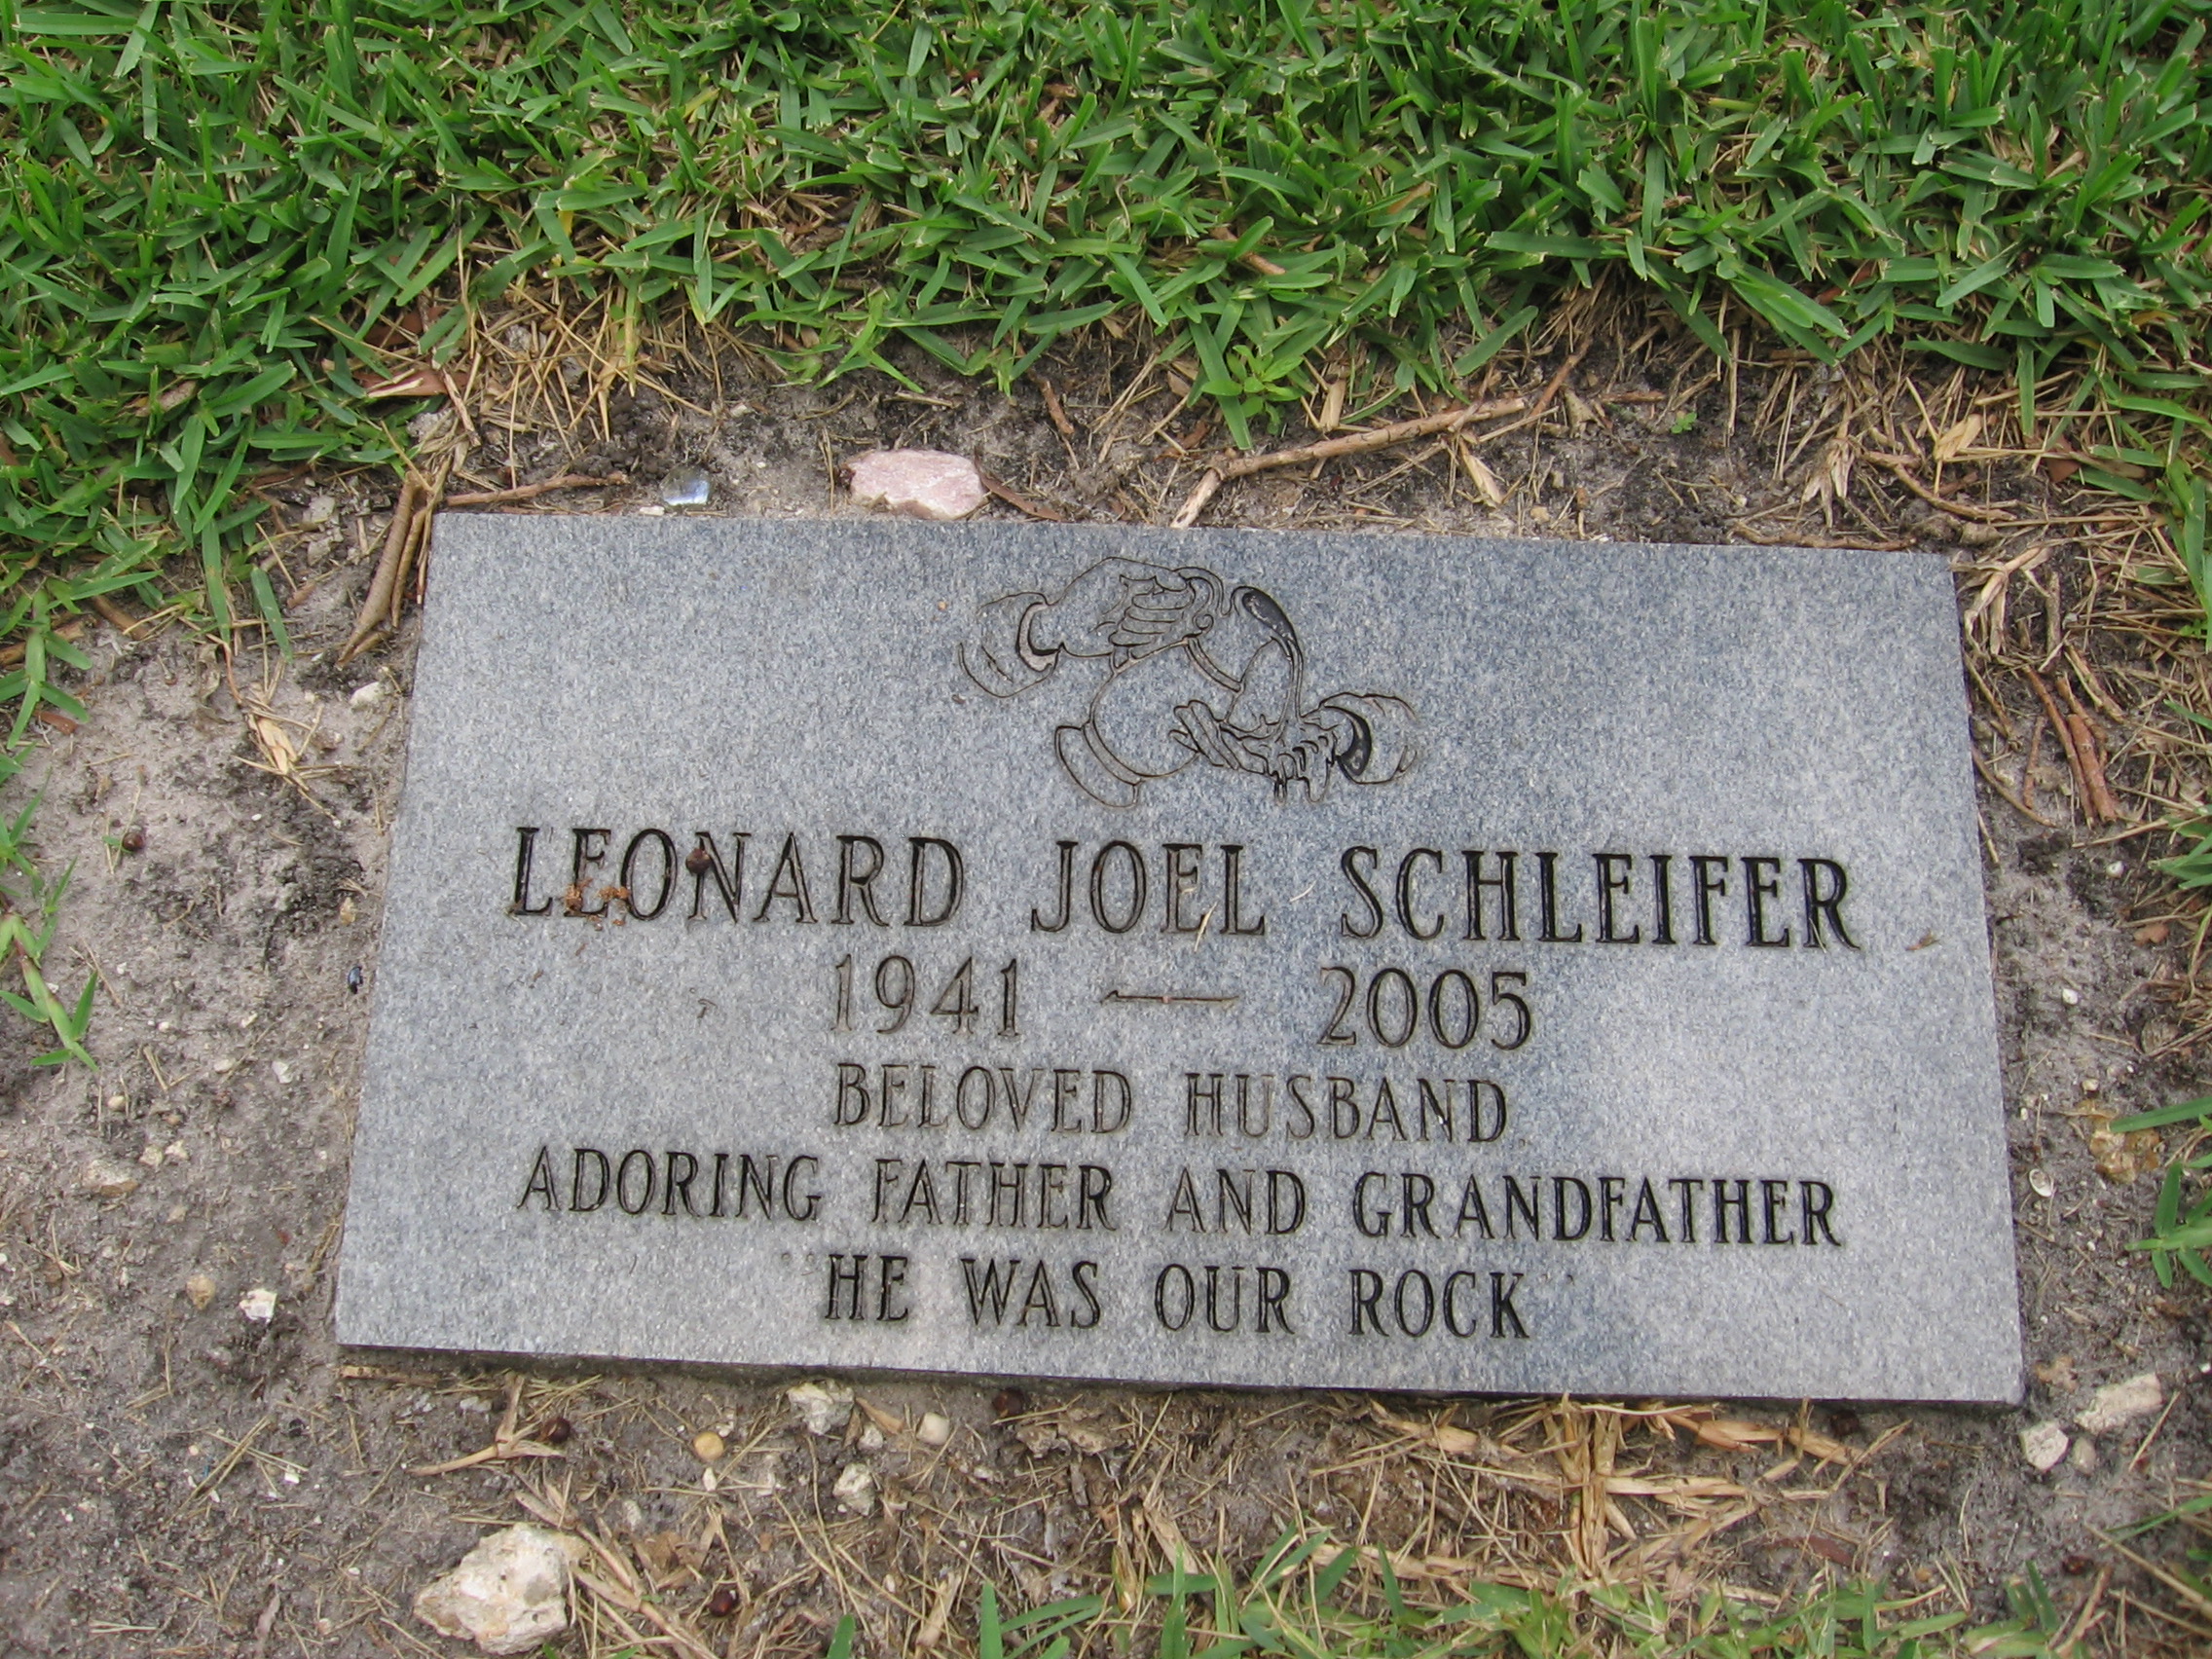 Leonard Joel Schleifer